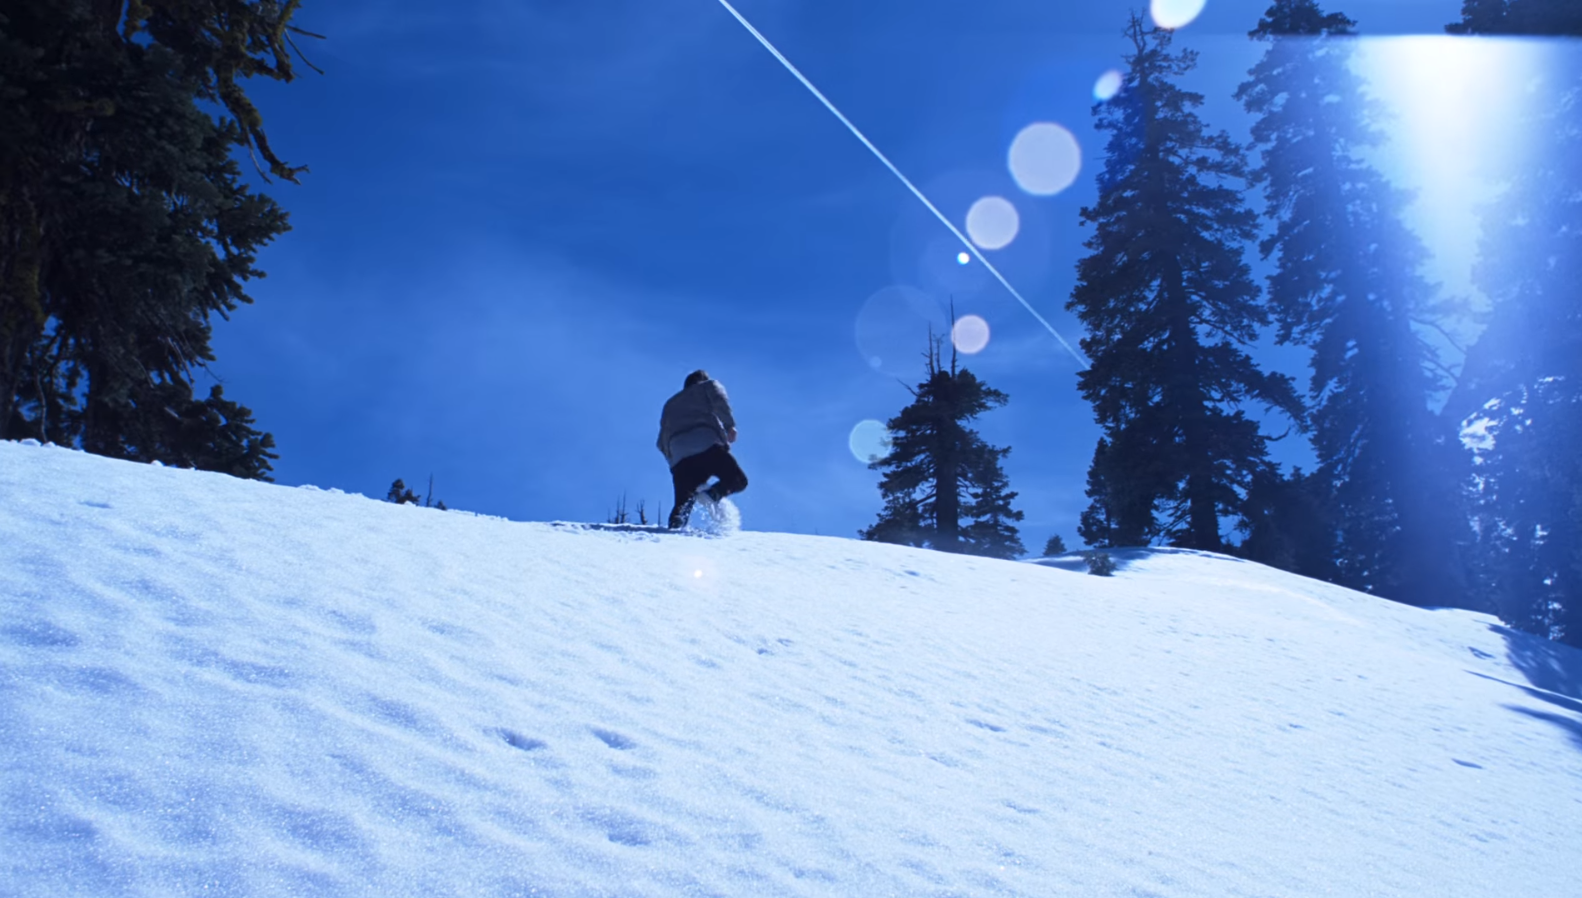 Screenshot from Radiohead's "Daydreaming" music video